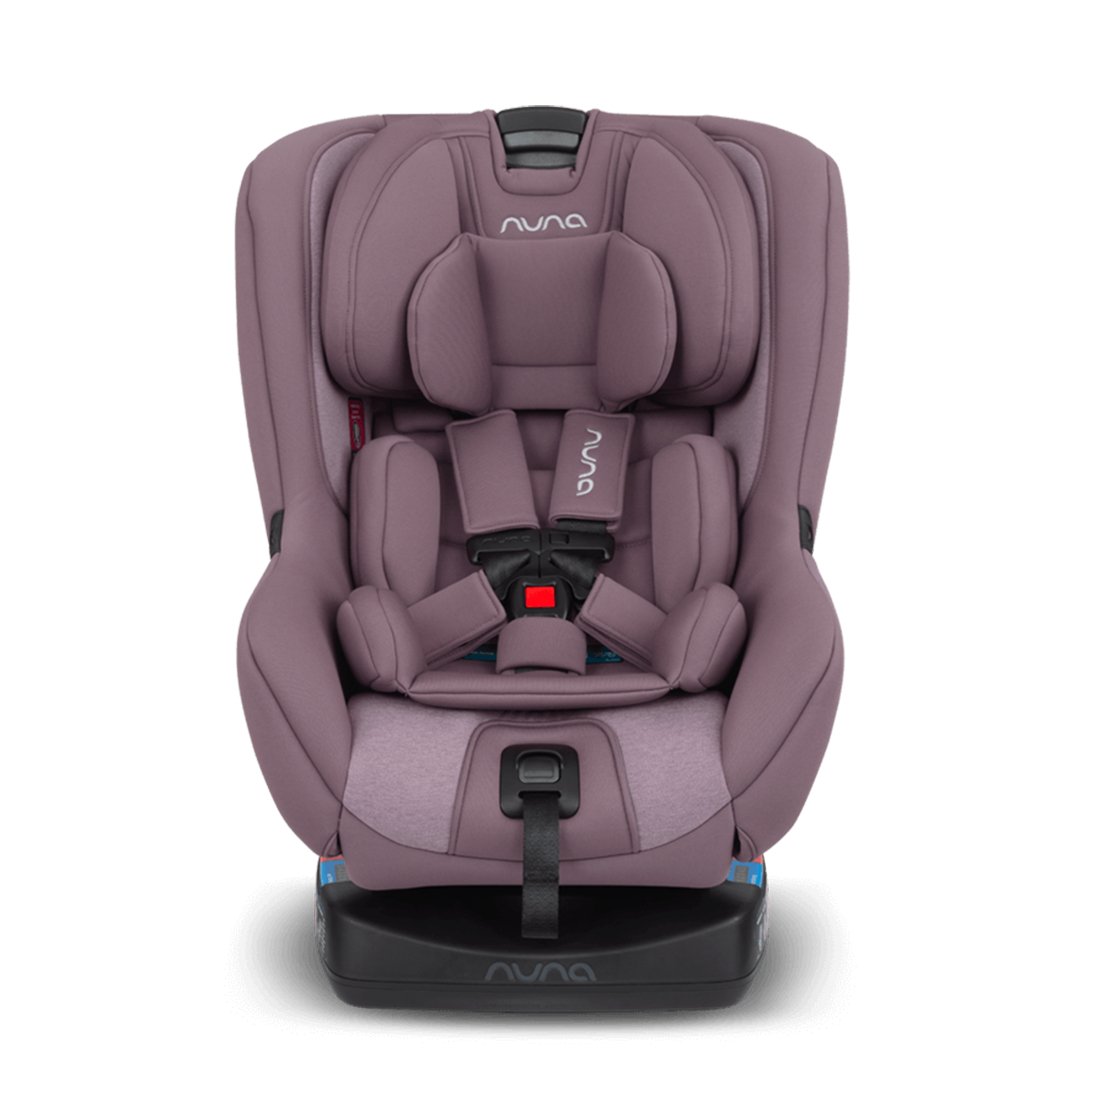 NUNA RAVA Convertible Car Seat (Flame Retardant Free) - ANB Baby -8719743744127$500 - $1000